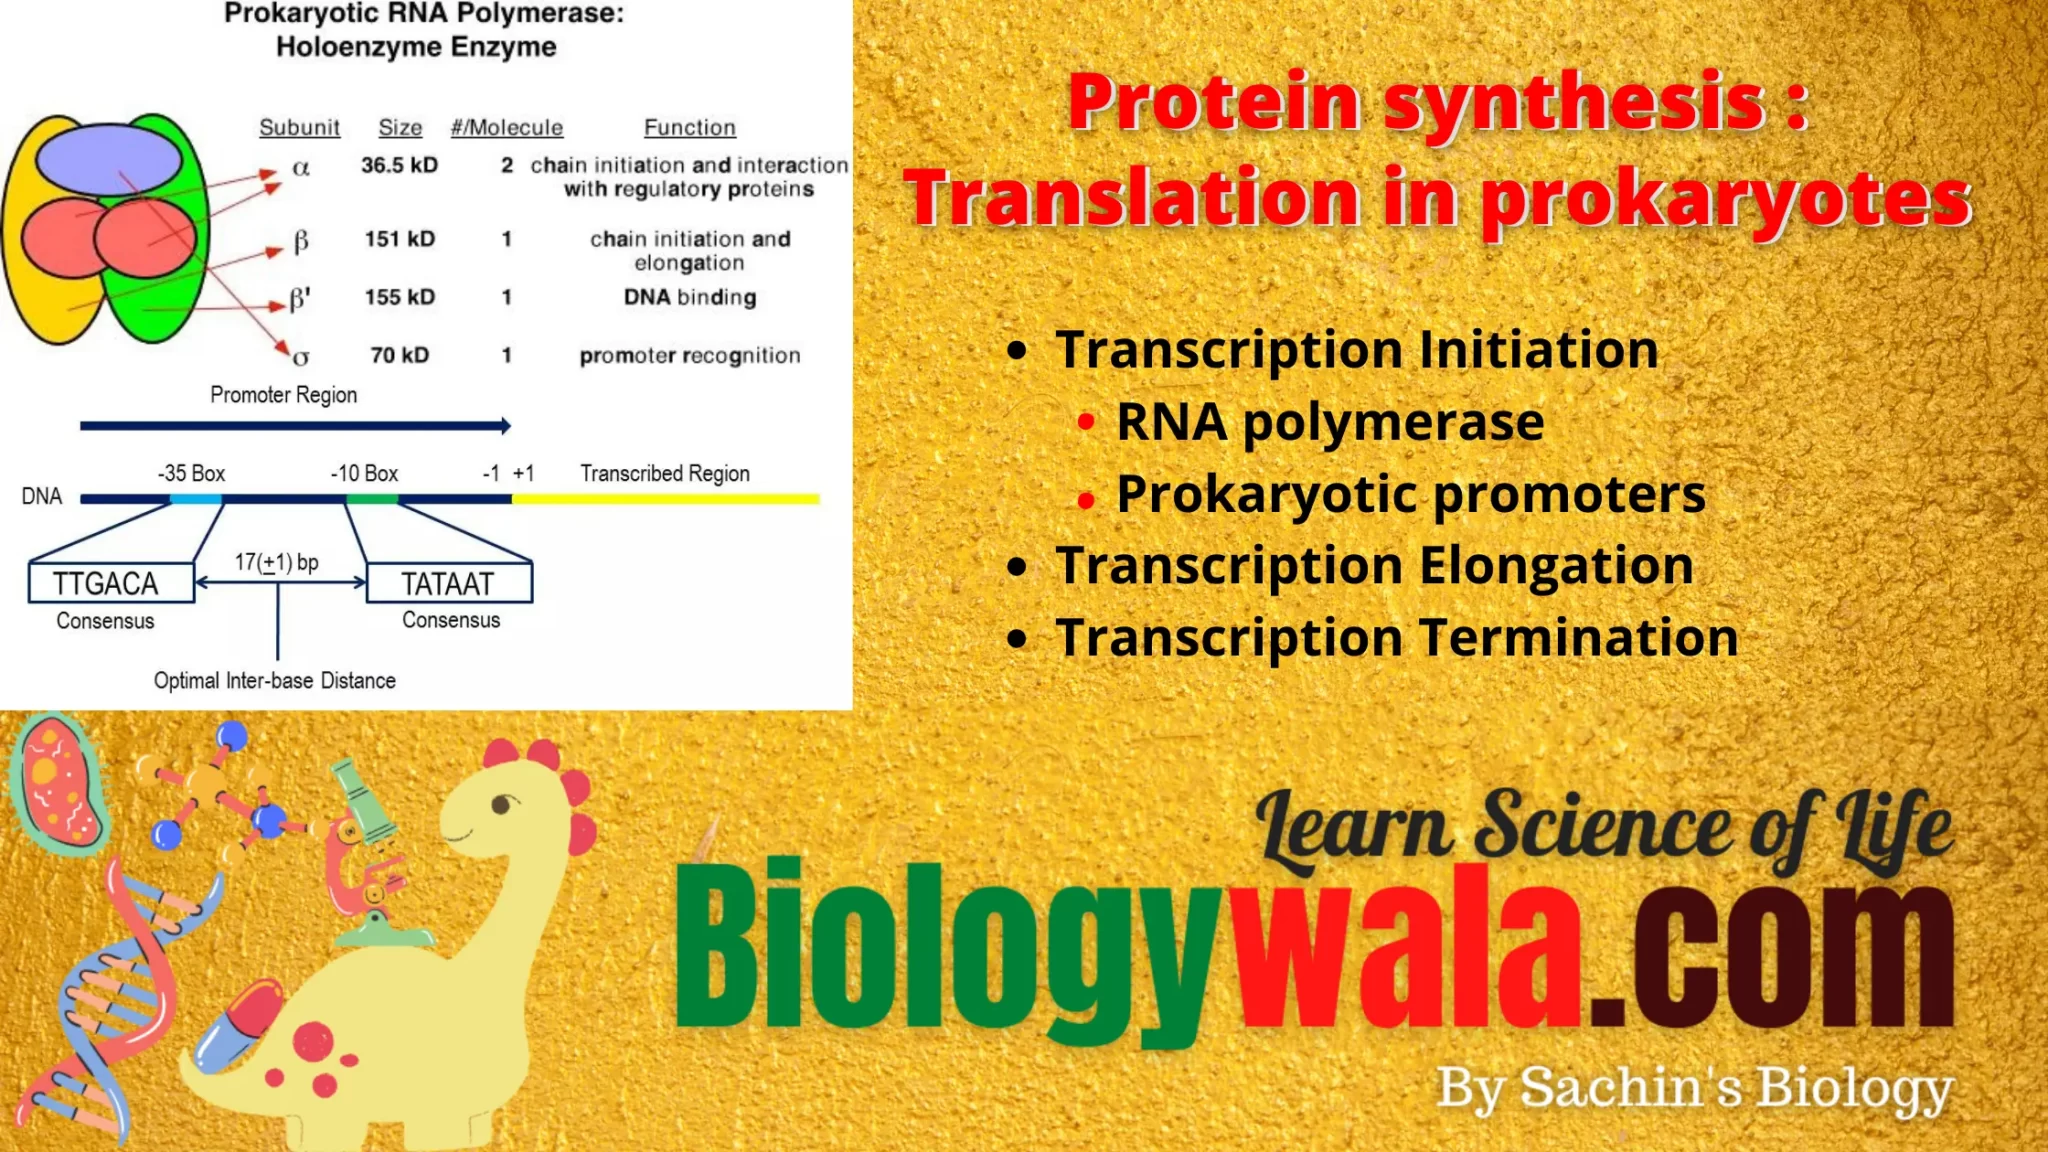 Transcription in prokaryotes